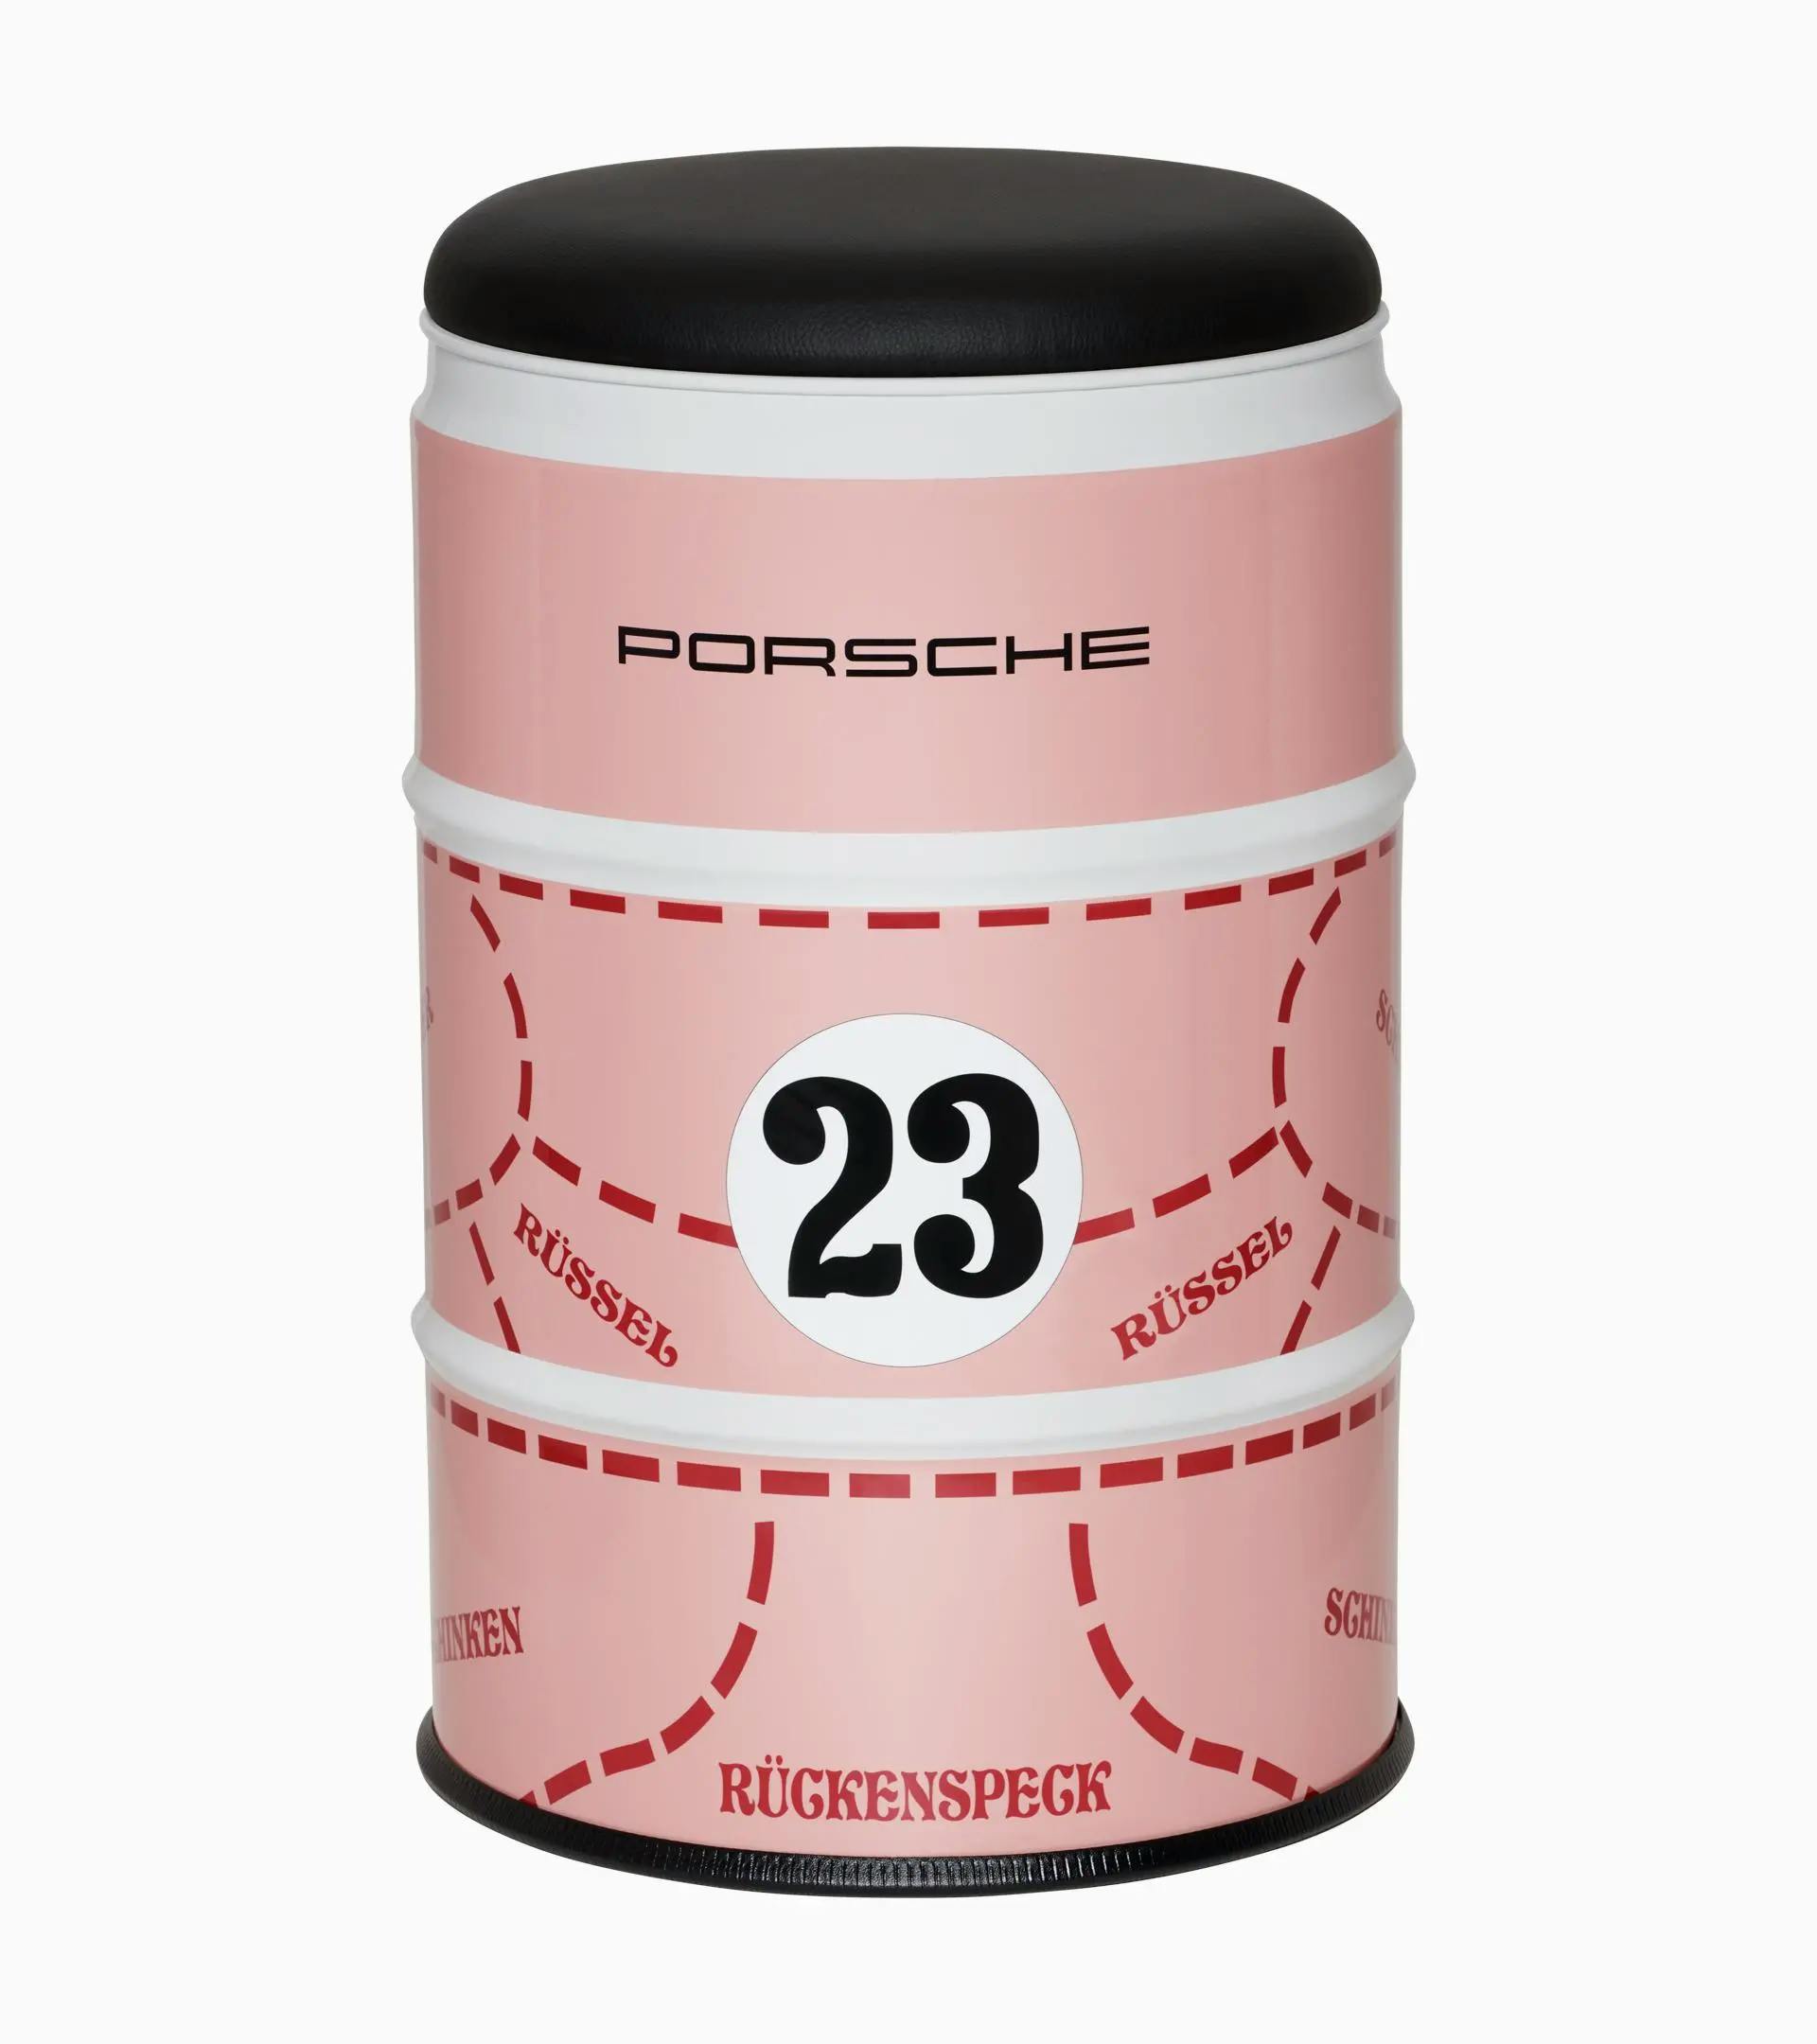 Taburete en forma de barril – 917 Pink Pig 1